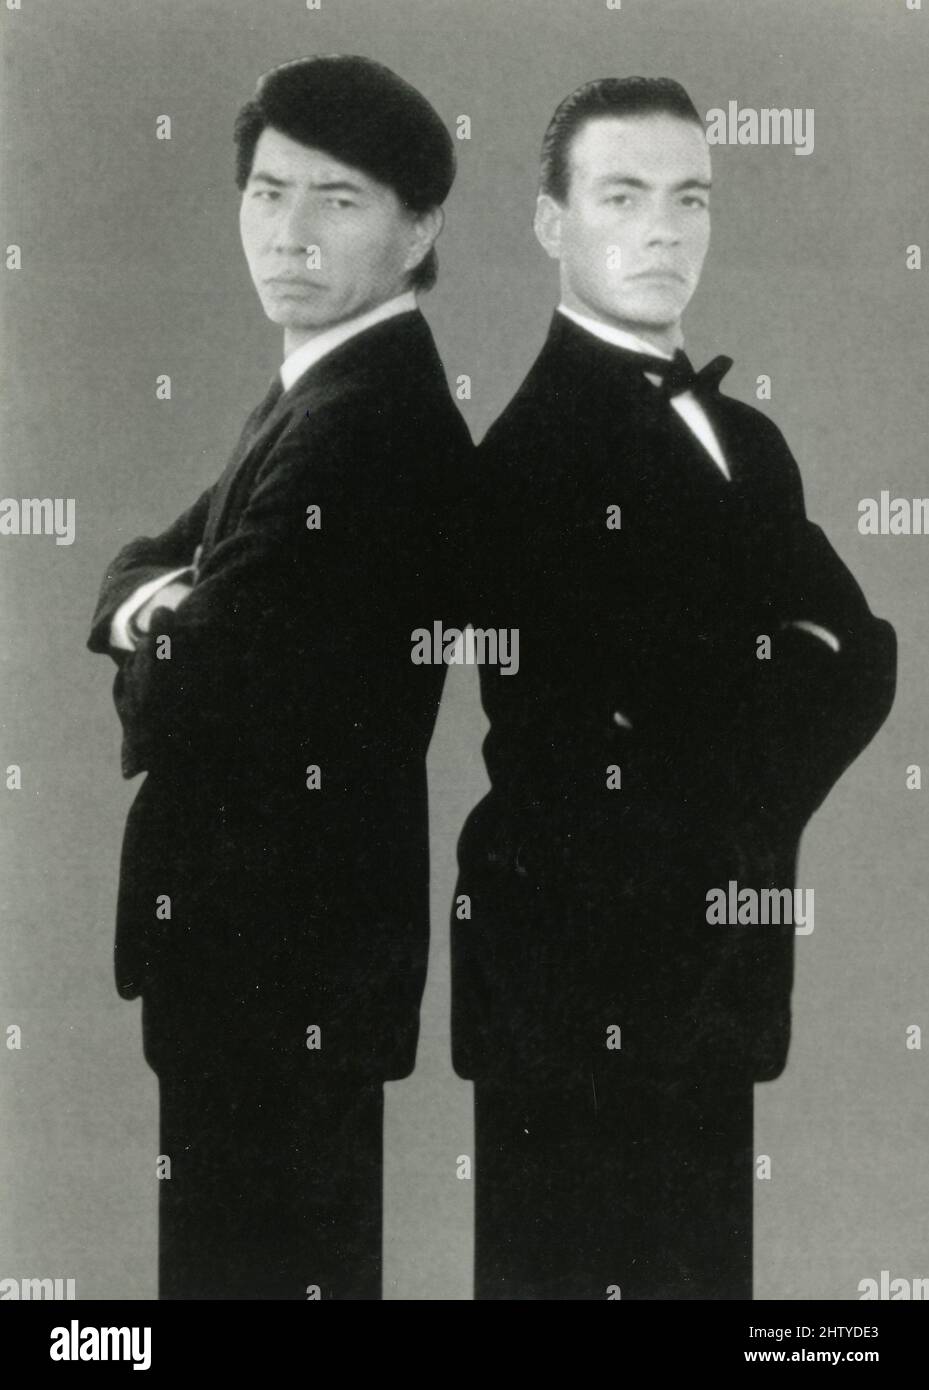 Japanese karate champion Sho Kosugi and Belgian actor Jean-Claude Van Damme in the movie Black Eagle, USA 1998 Stock Photo